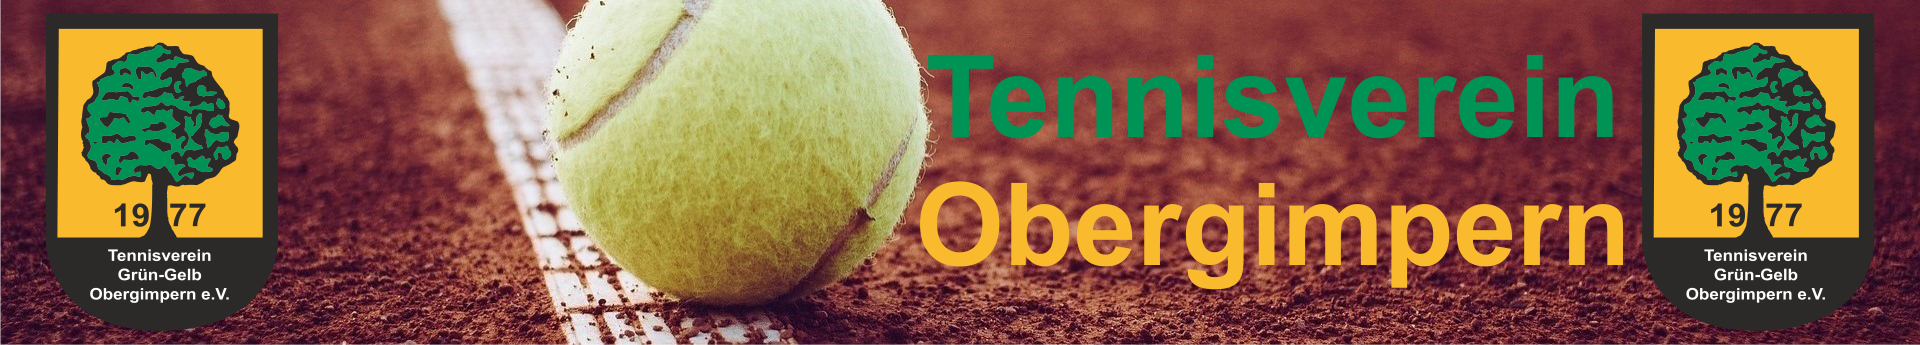 Tennisverein Obergimpern Title Image